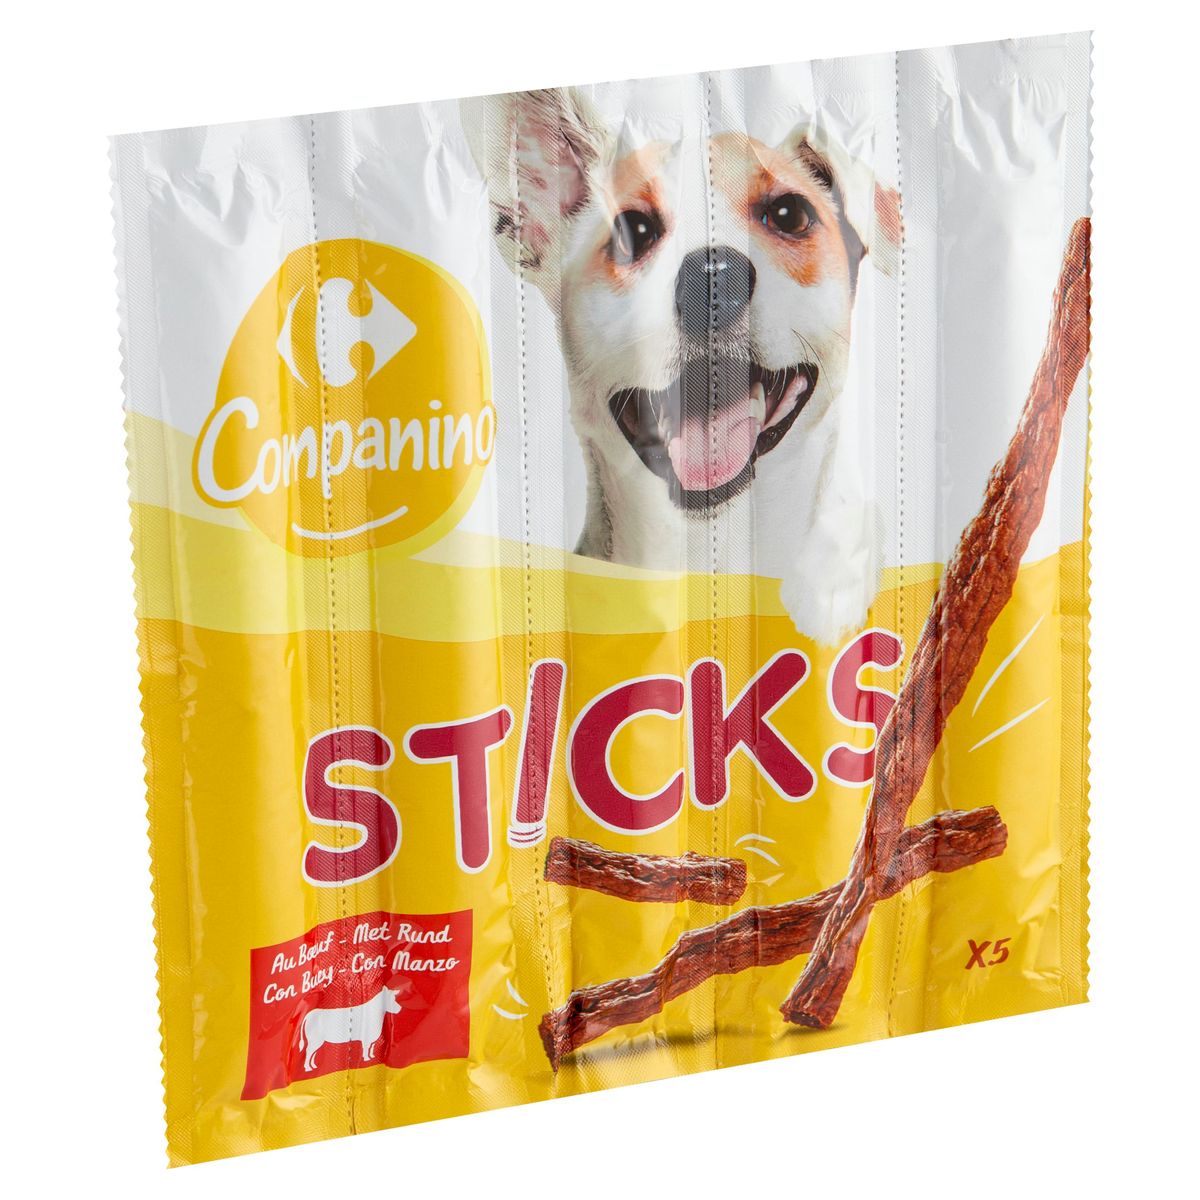 Carrefour Companino Sticks met Rund 5 x 10 g